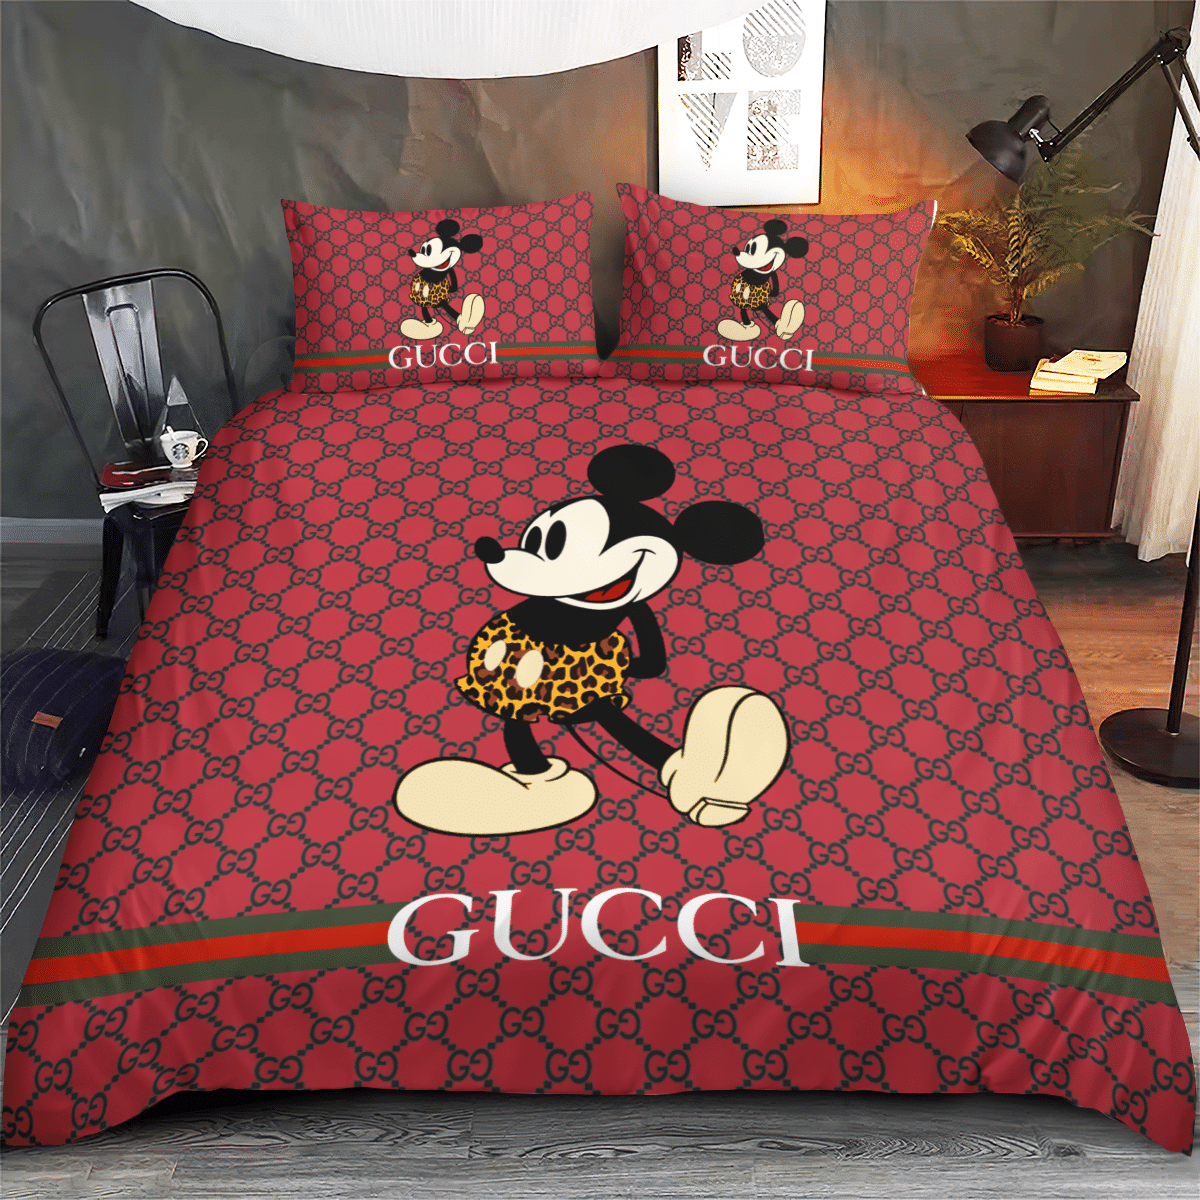 Gucci Bedding Sets 16